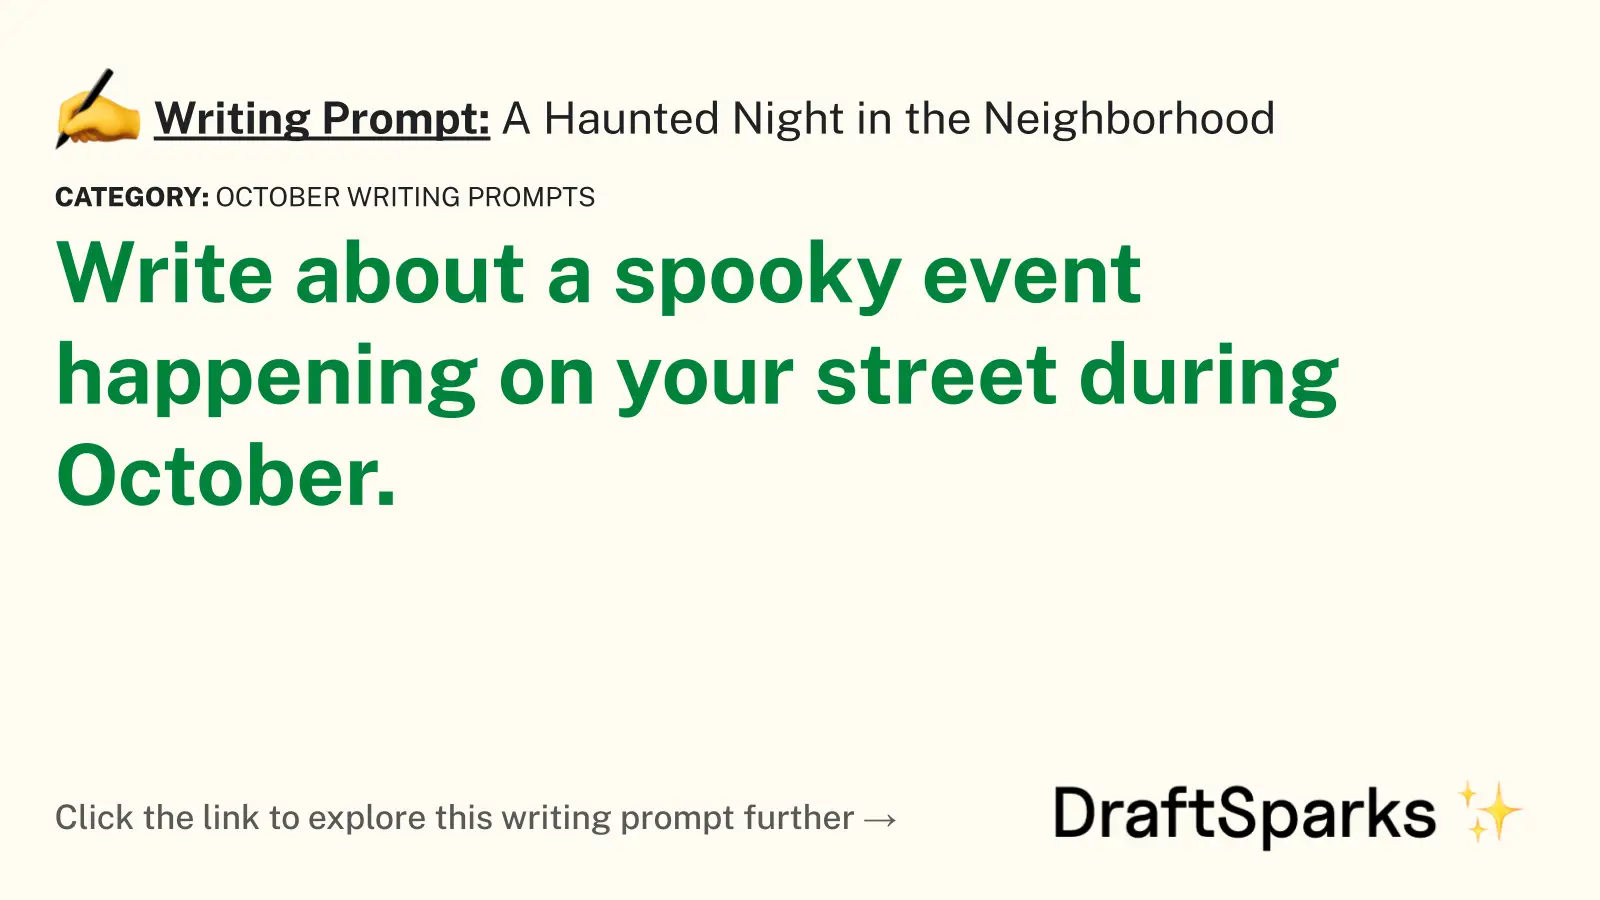 A Haunted Night in the Neighborhood